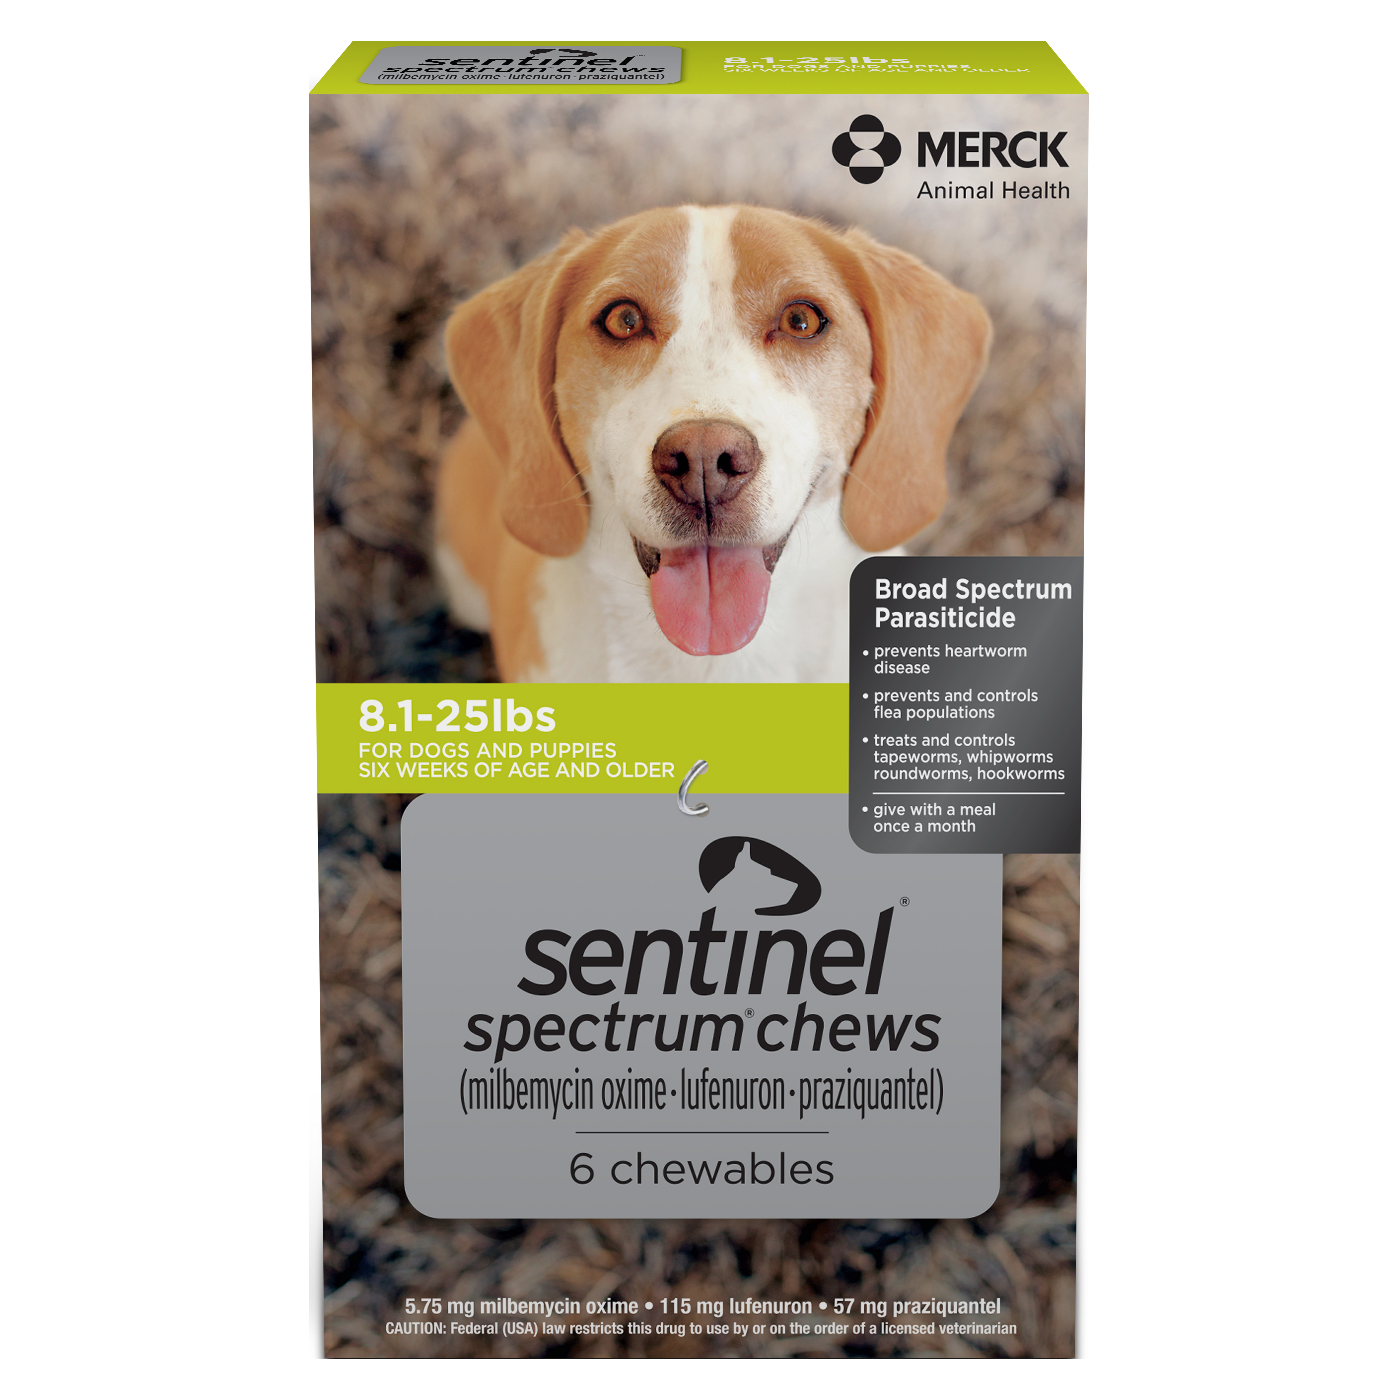 SENTINEL® SPECTRUM® CHEWS (milbemycin oxime/lufenuron/praziquantel) product box for dogs 8.1 lbs - 25 lbs